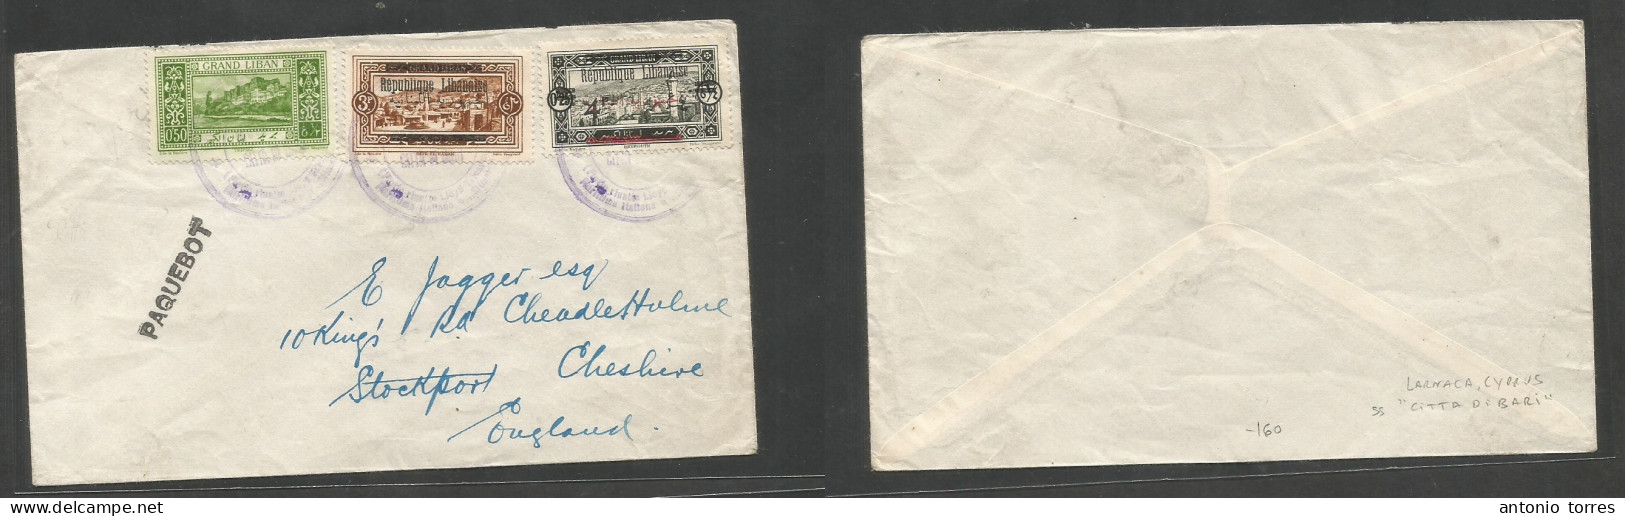 Lebanon. C. 1928. Multifkd Pqbt Mail Envelope To Stockport, England, Lilac Cachet "Citta De Bari" Cancelled On Transit A - Liban